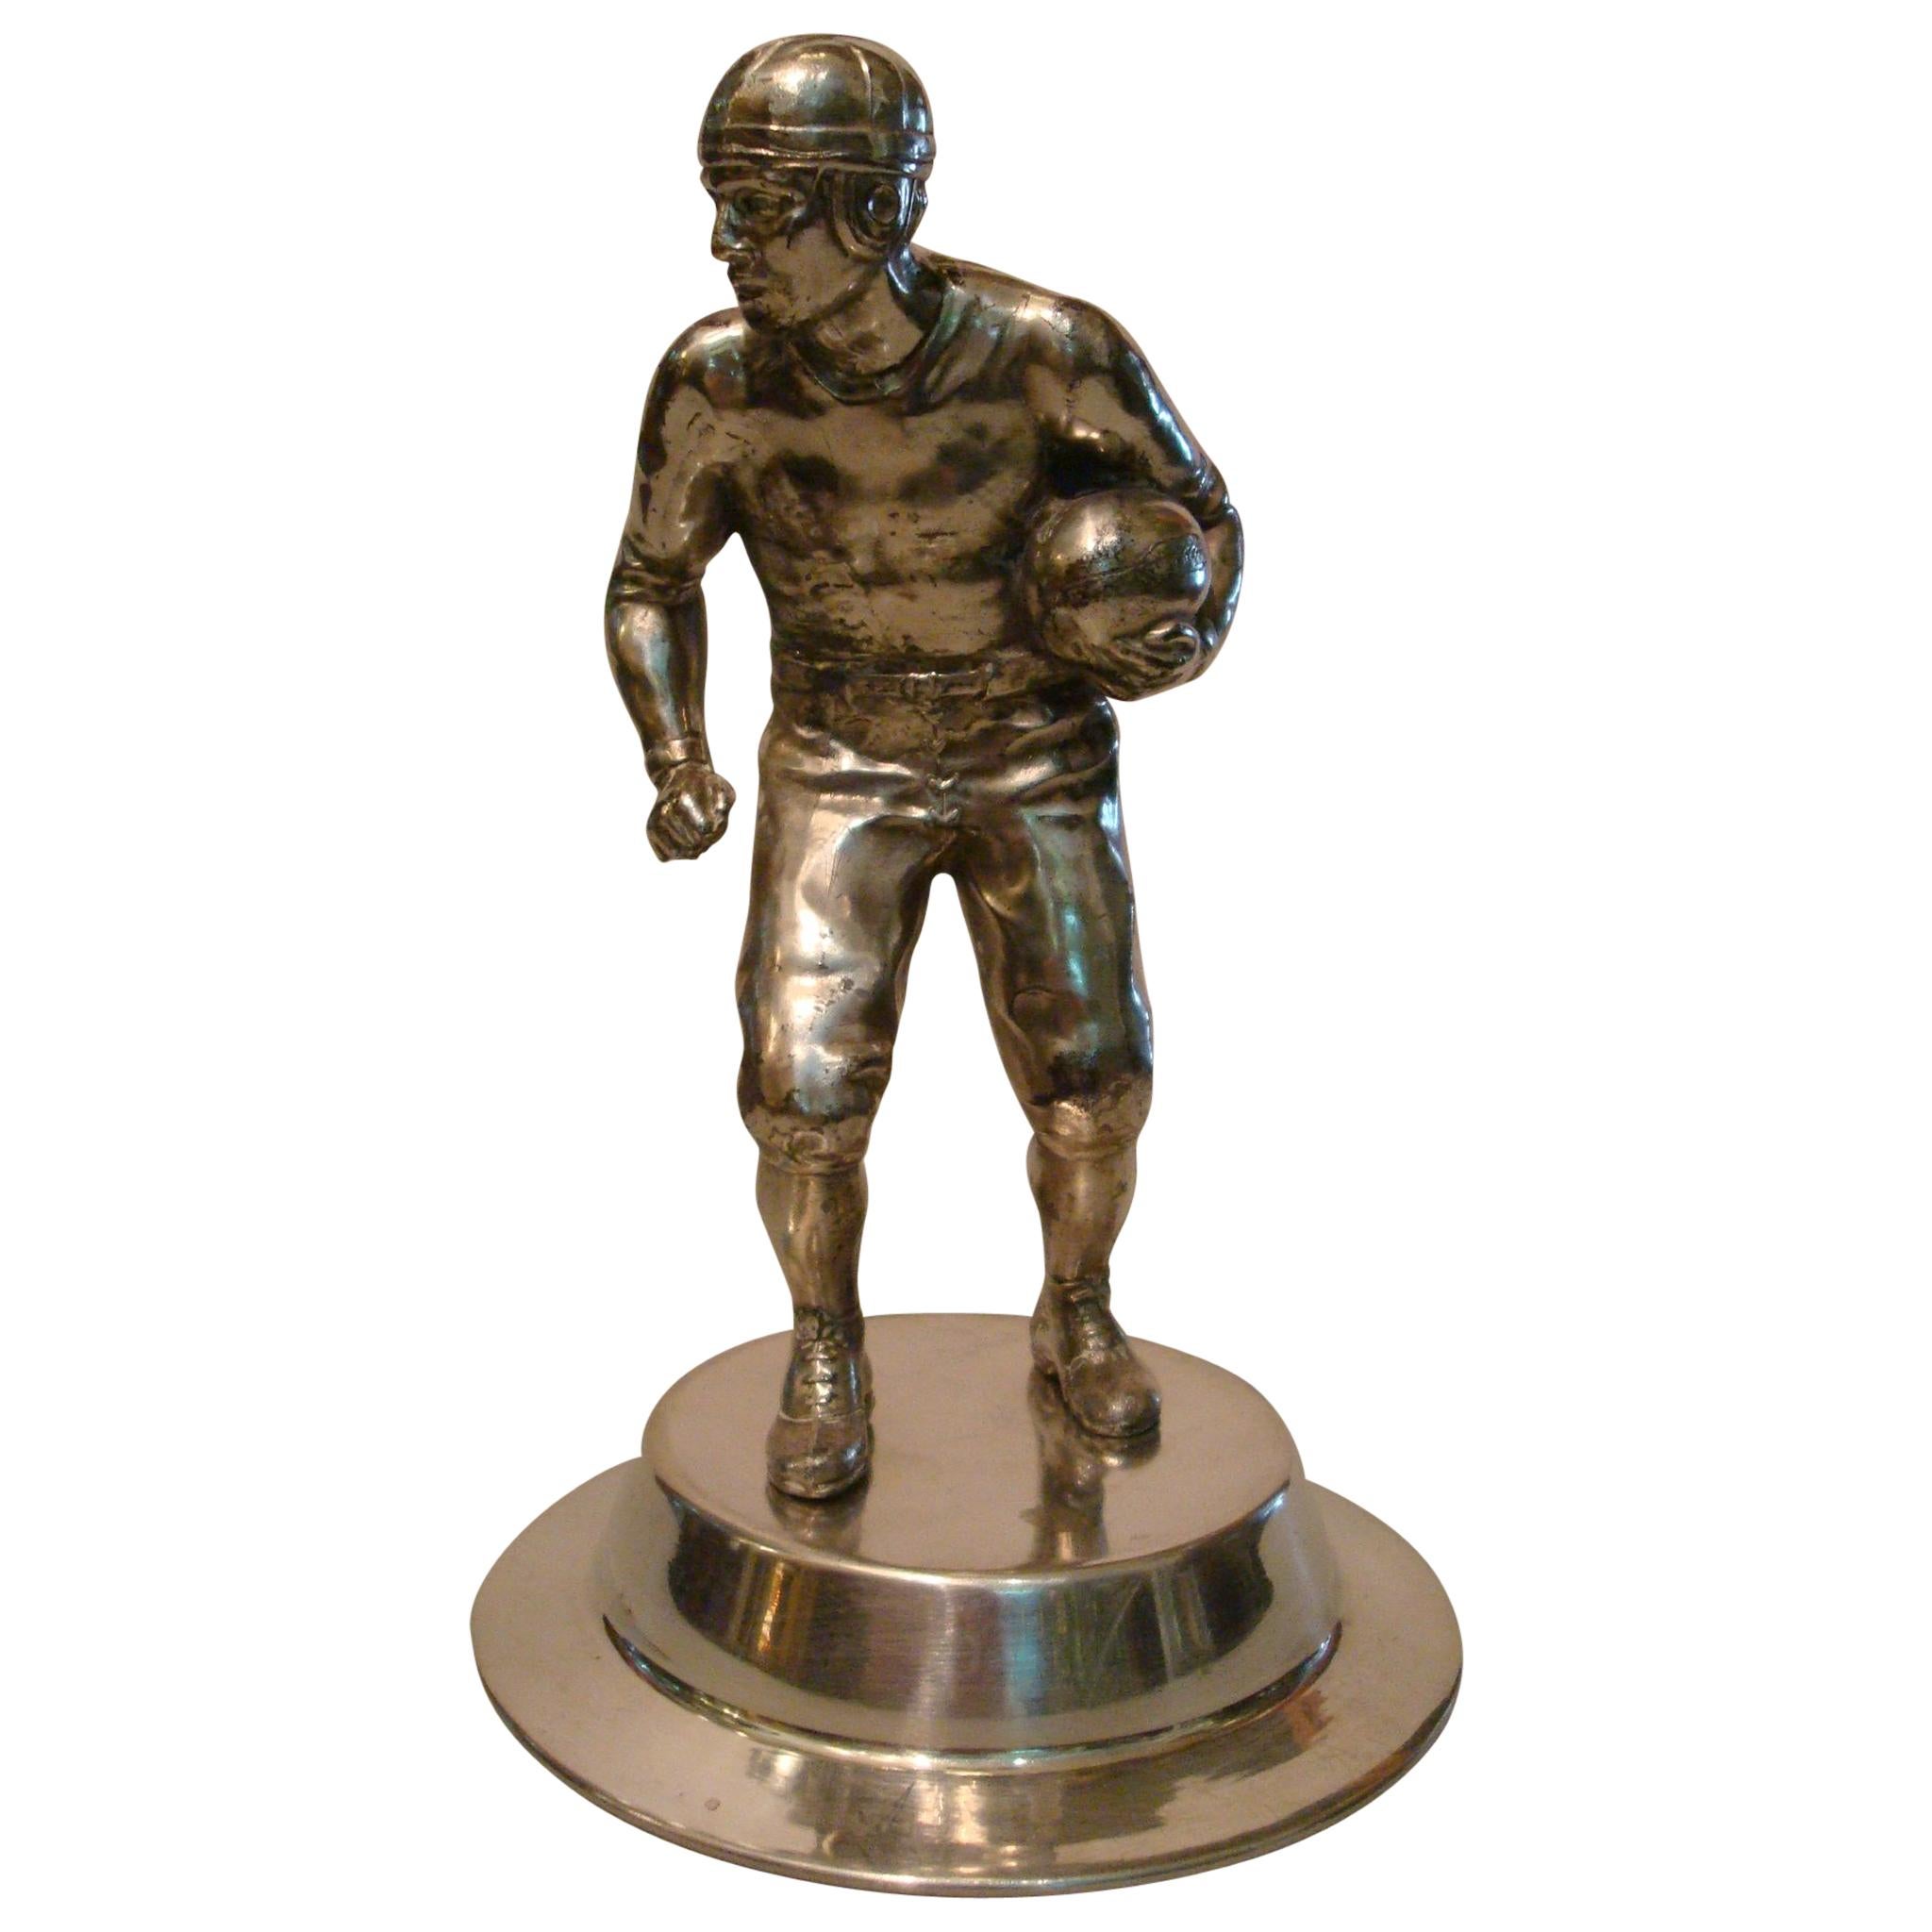 American Football Sculpture/Trophy, Desk Piece, Silvered Metal, 1930s